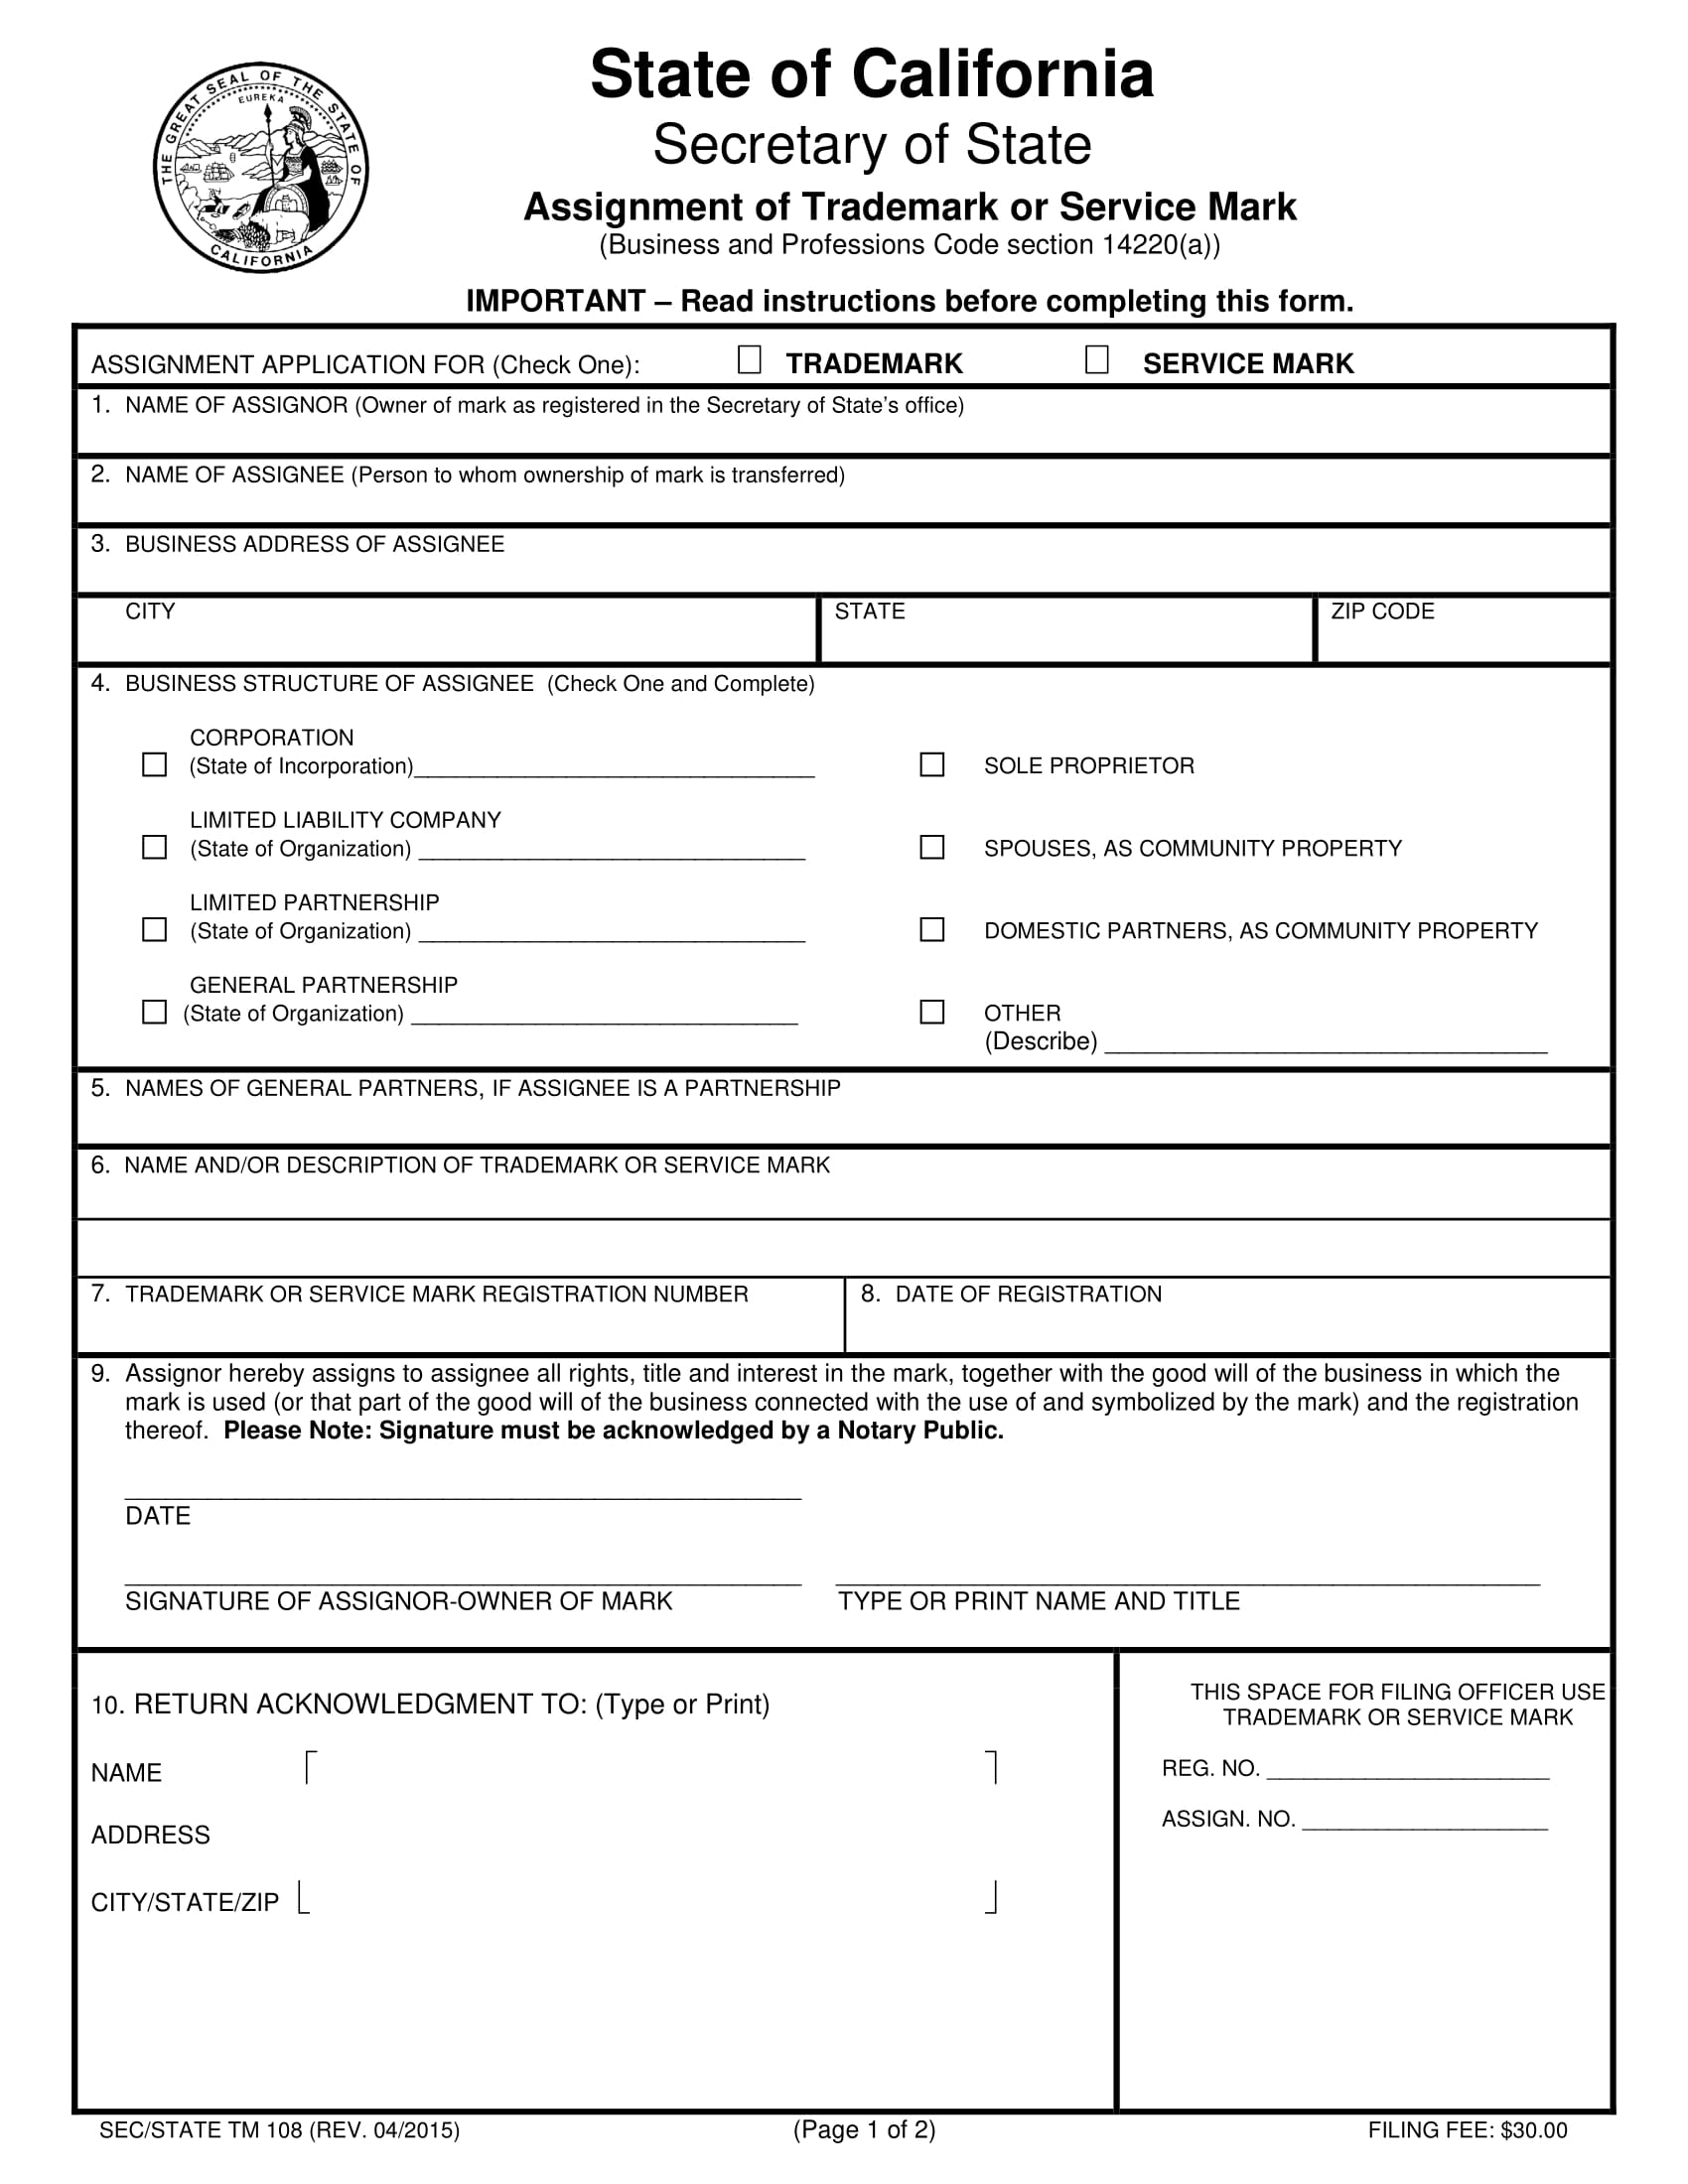 canada trademark assignment form